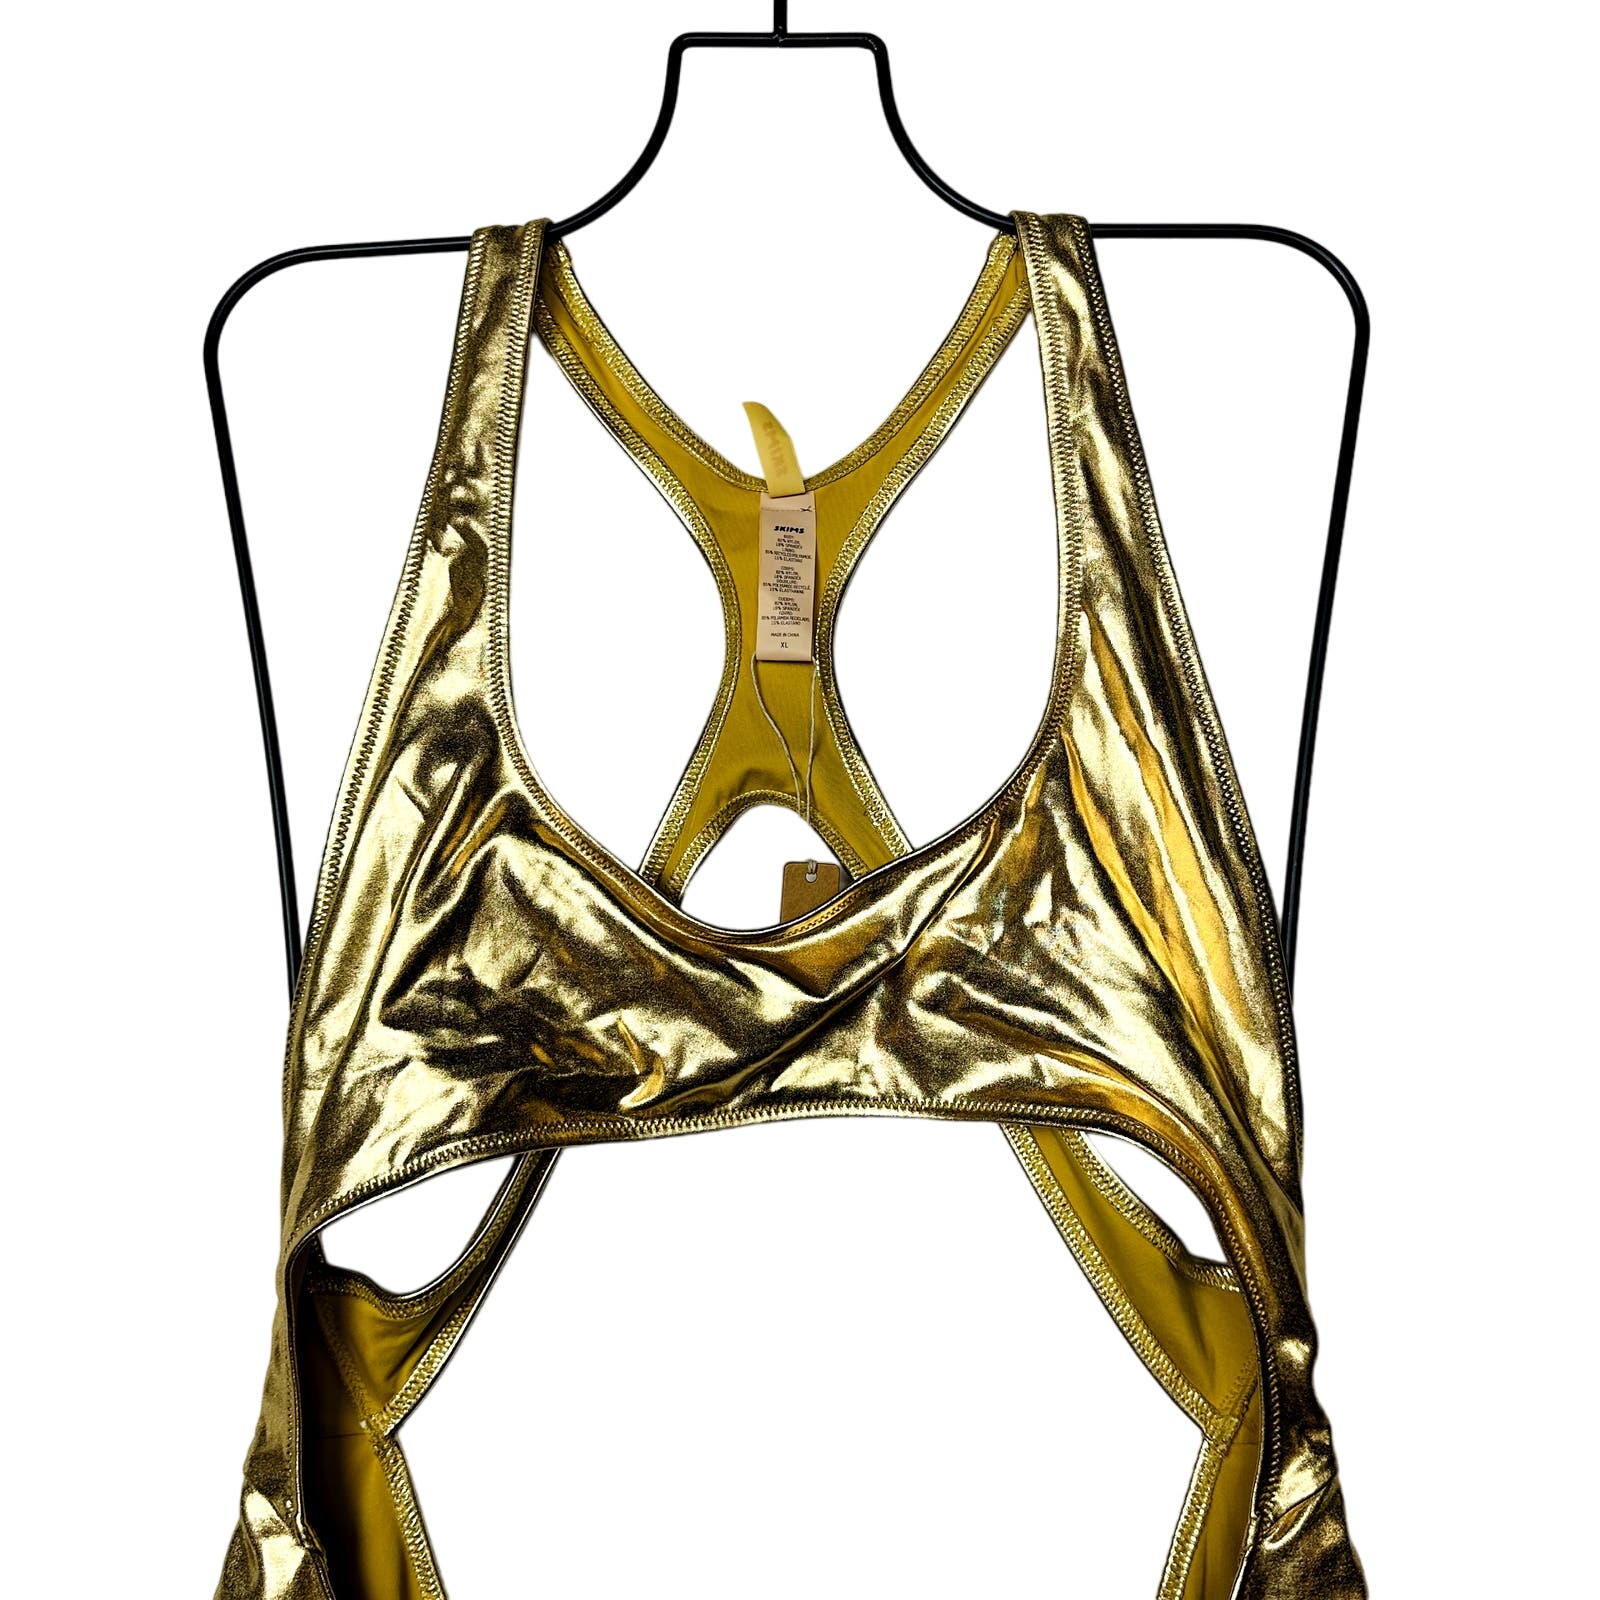 SKIMS NWT Cut-Out Monokini Swimwear Gold Size XL